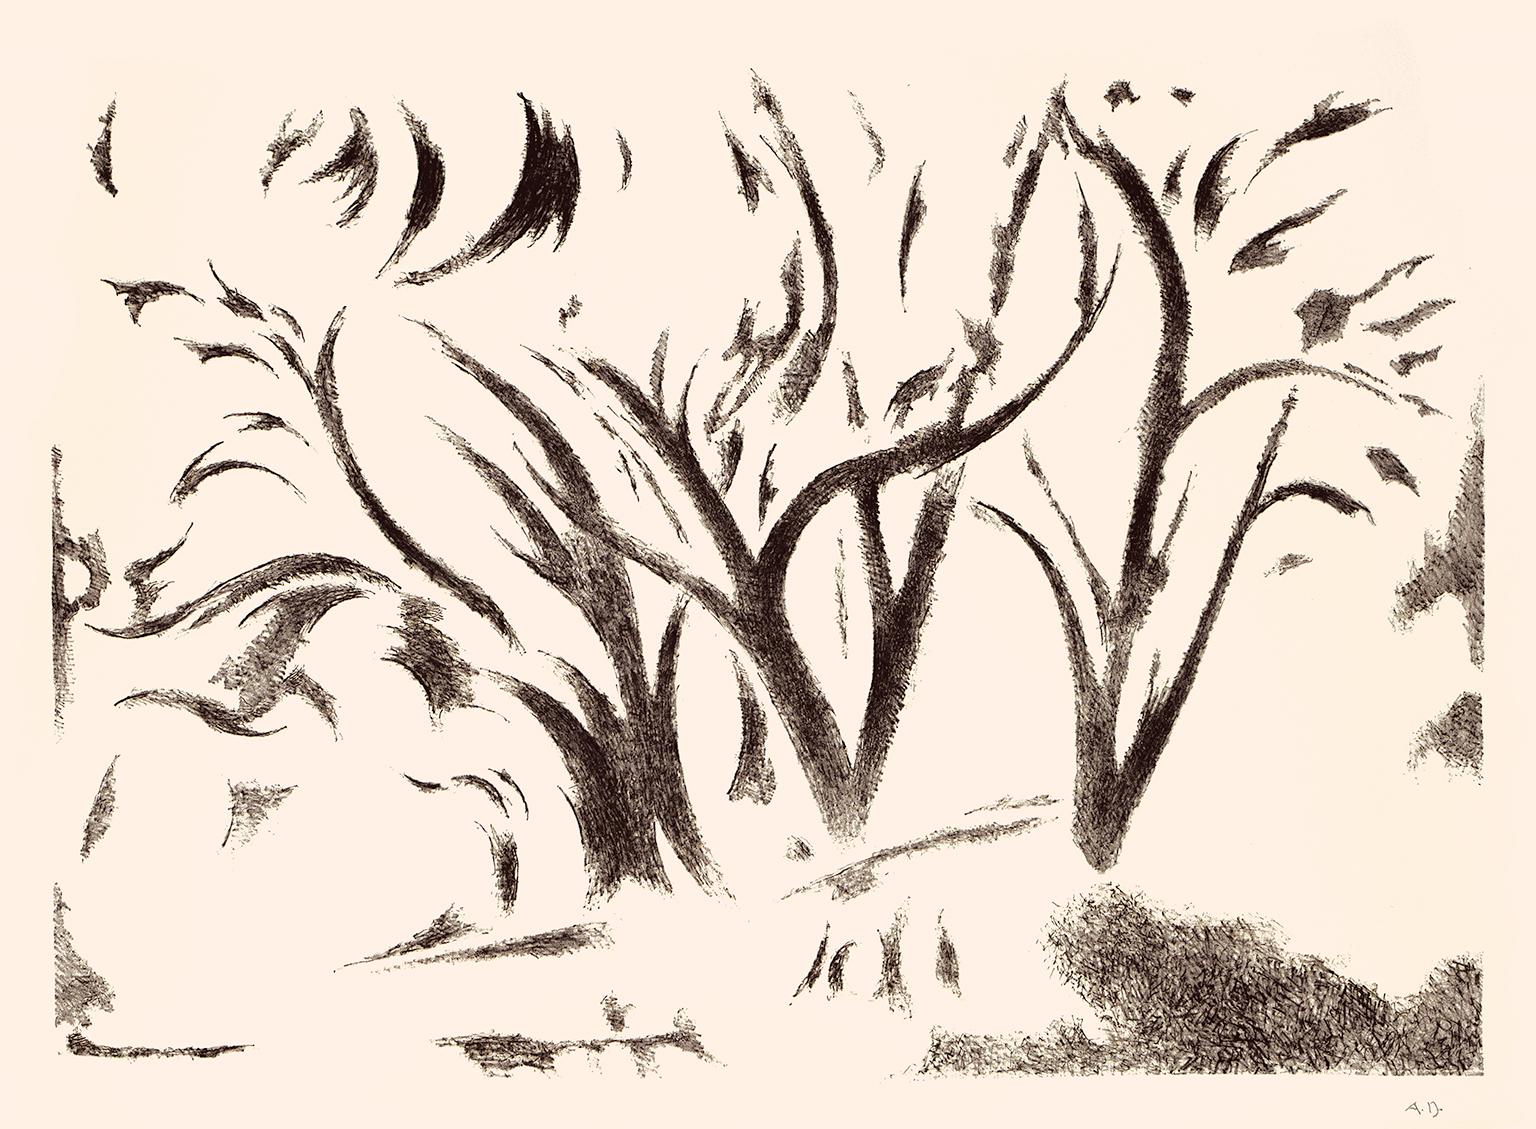 Andrew Dasburg Landscape Print – Trees in Ranchitos I, 1970er Jahre, Taos Modernismus